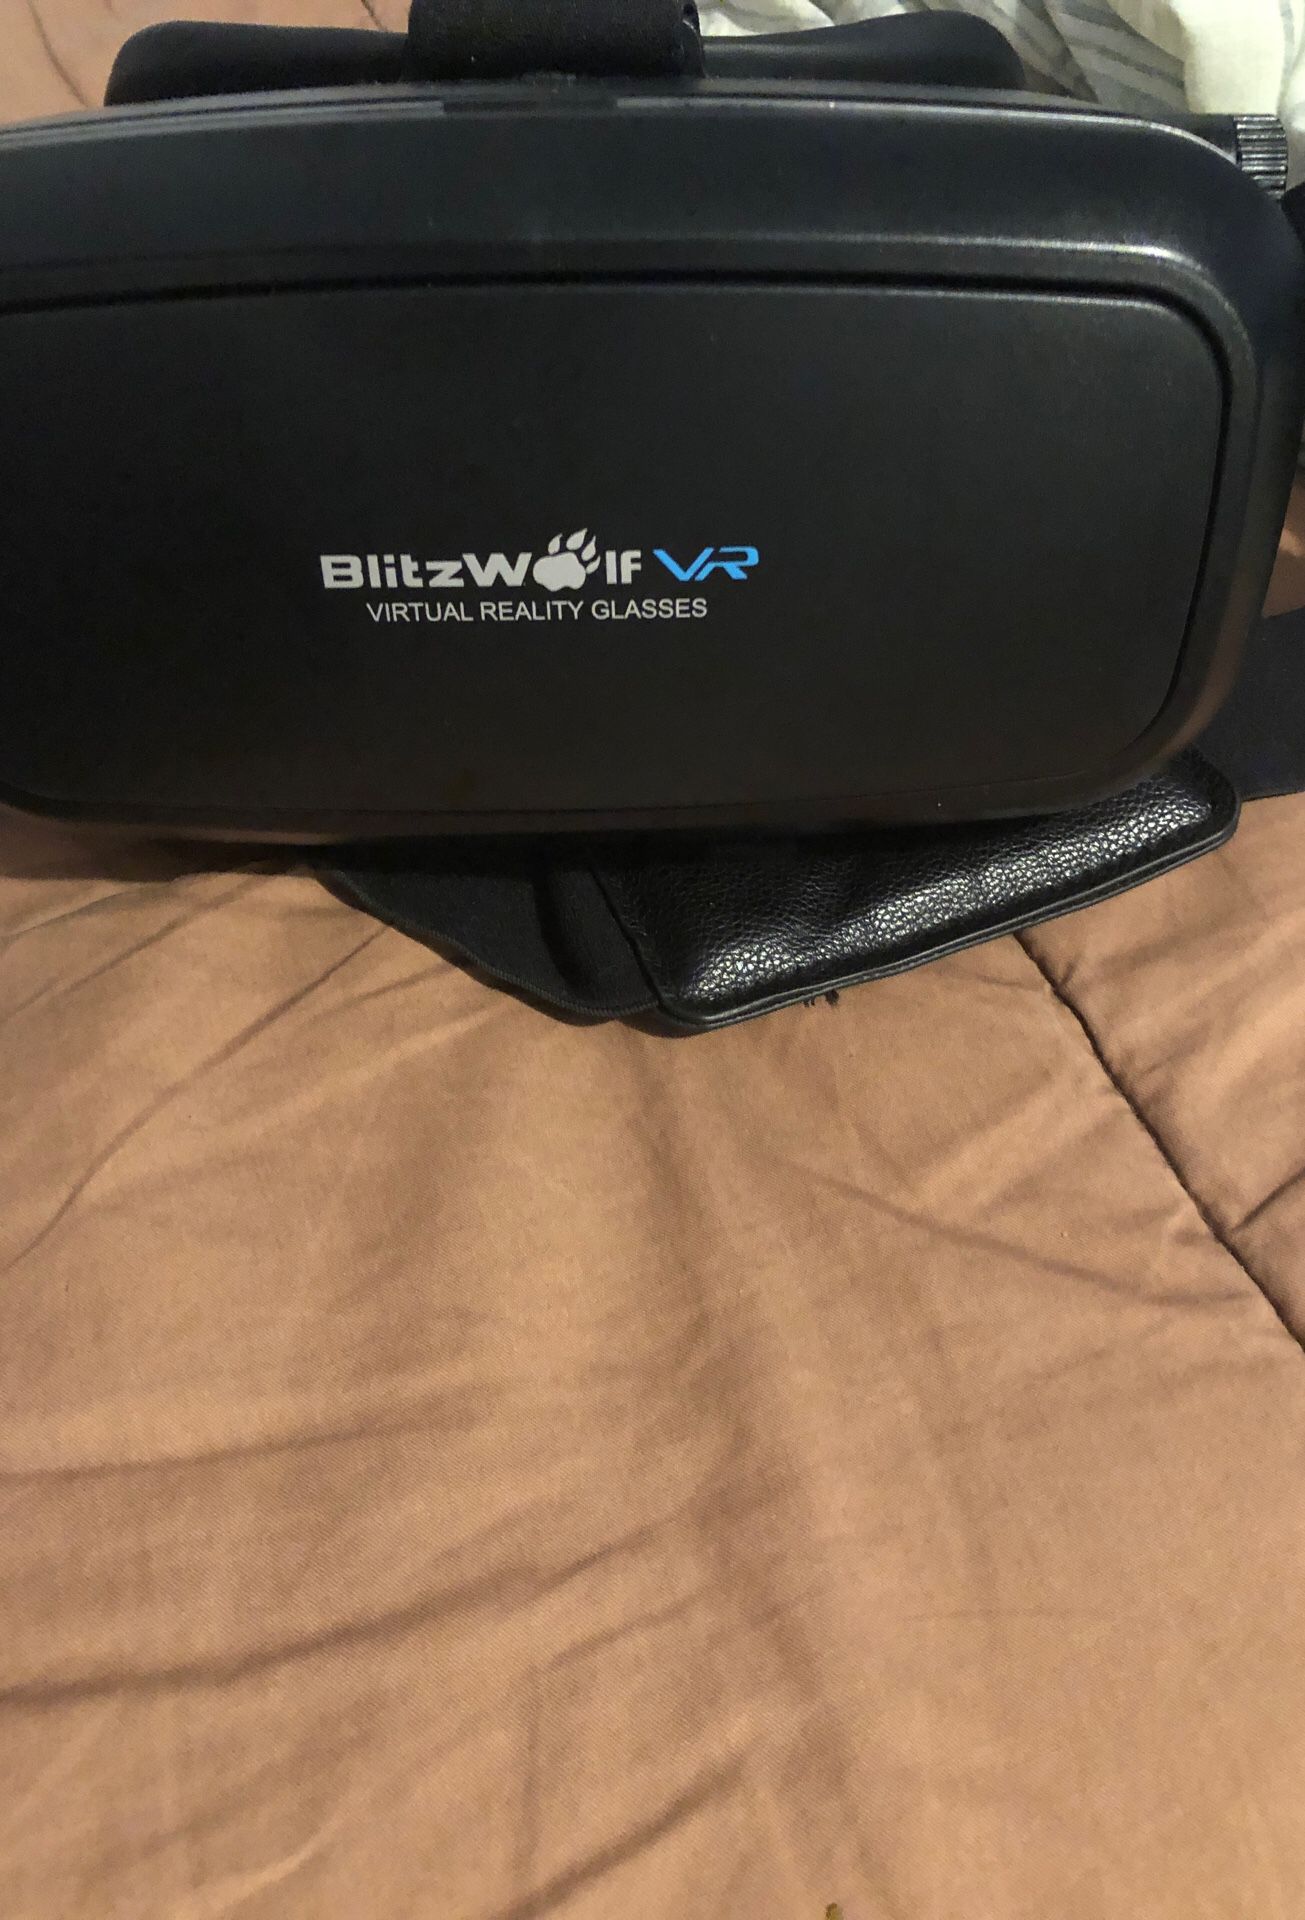 Blitz wolf VR headset